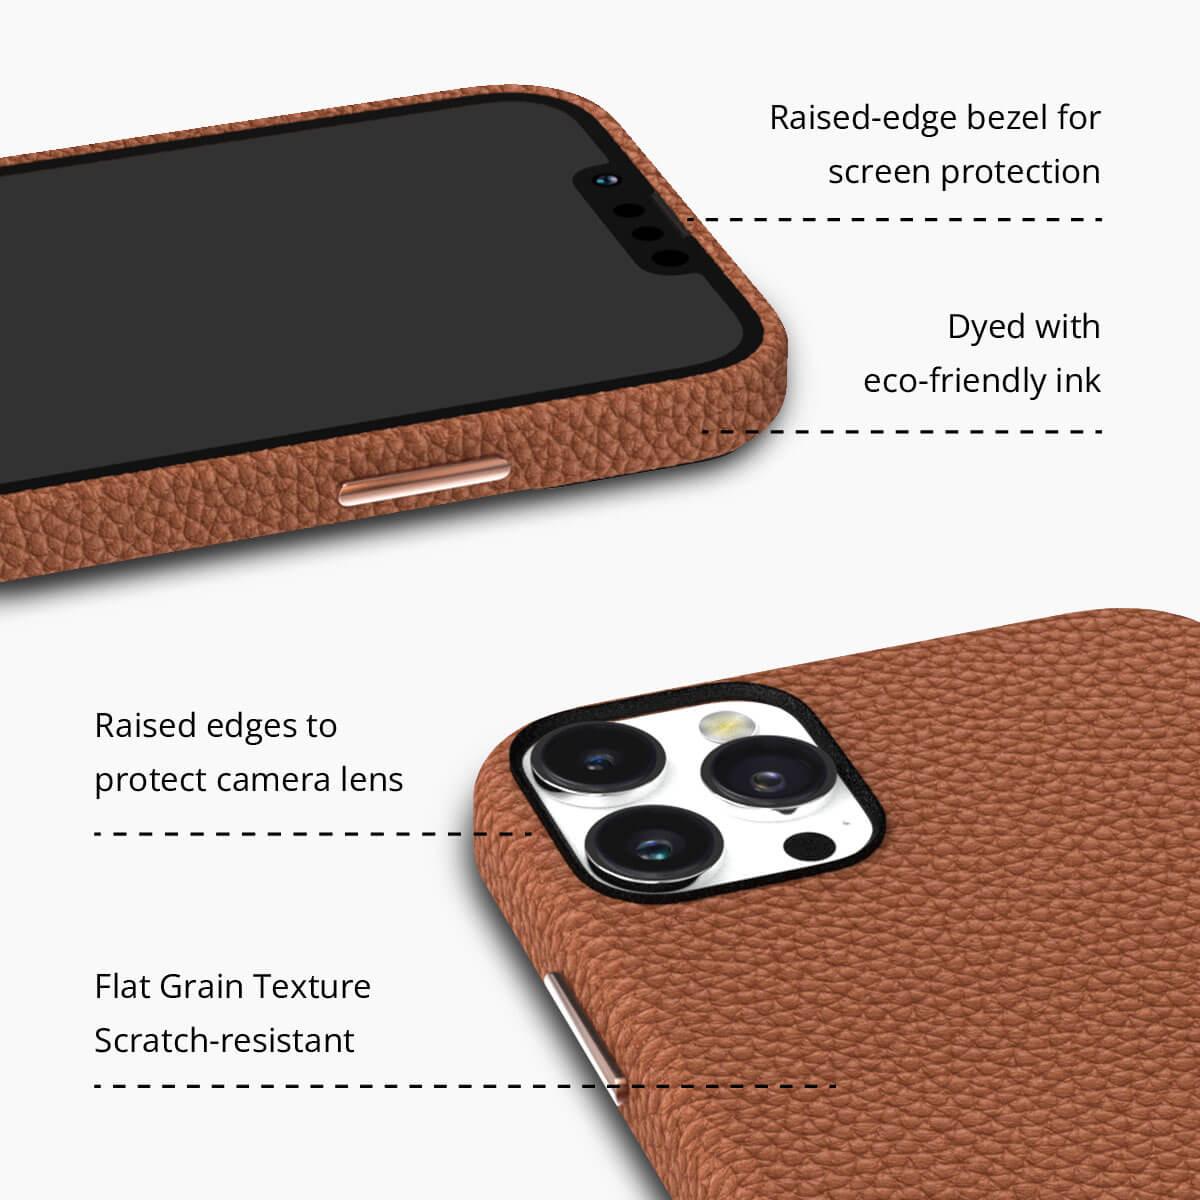 iPhone XR Brown Premium Leather Phone Case - CORECOLOUR